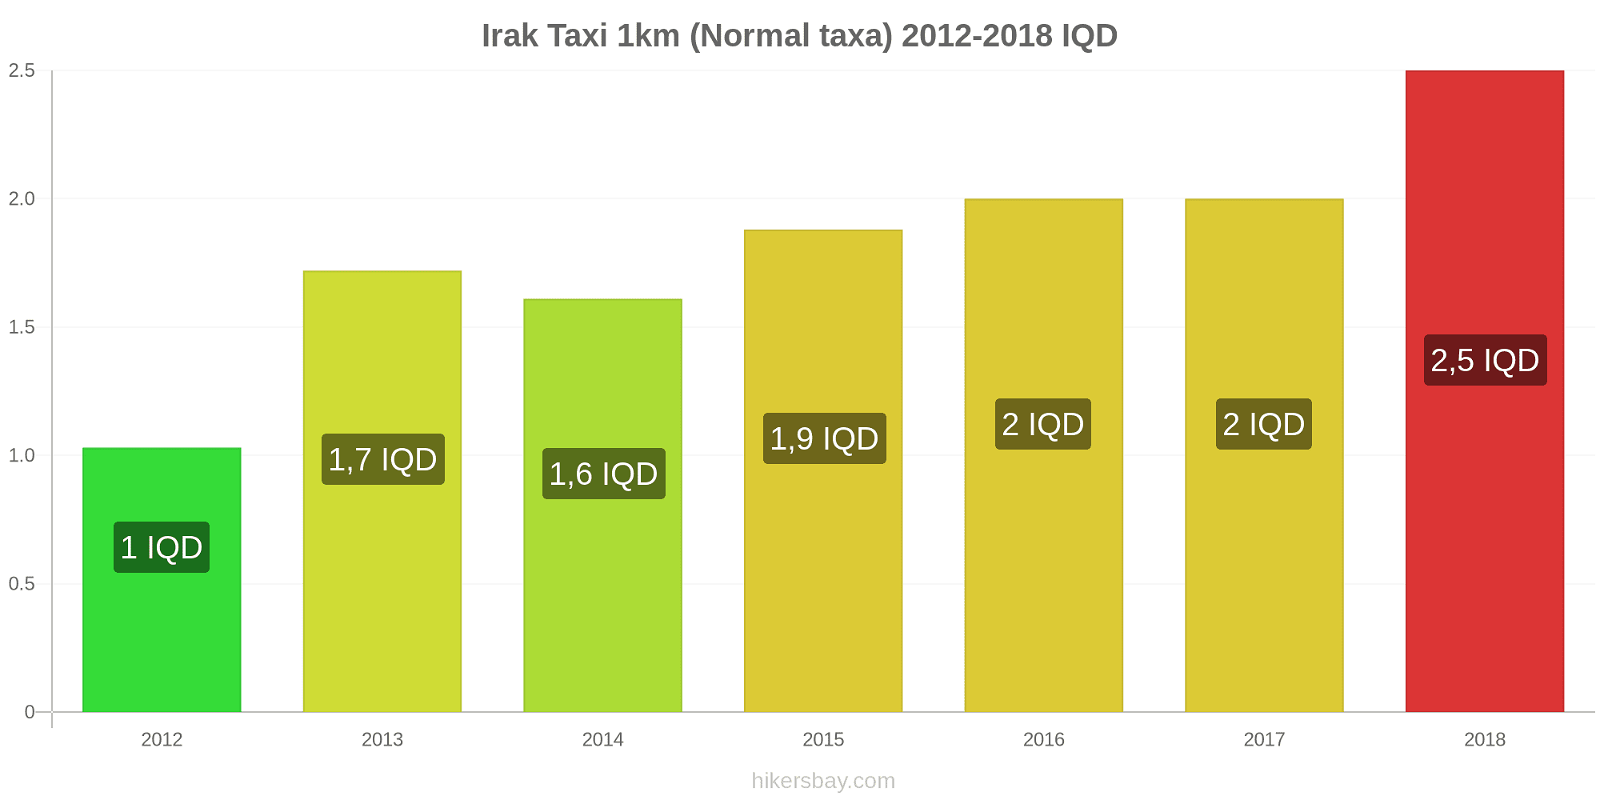 Irak prisändringar Taxi 1km (Normal taxa) hikersbay.com